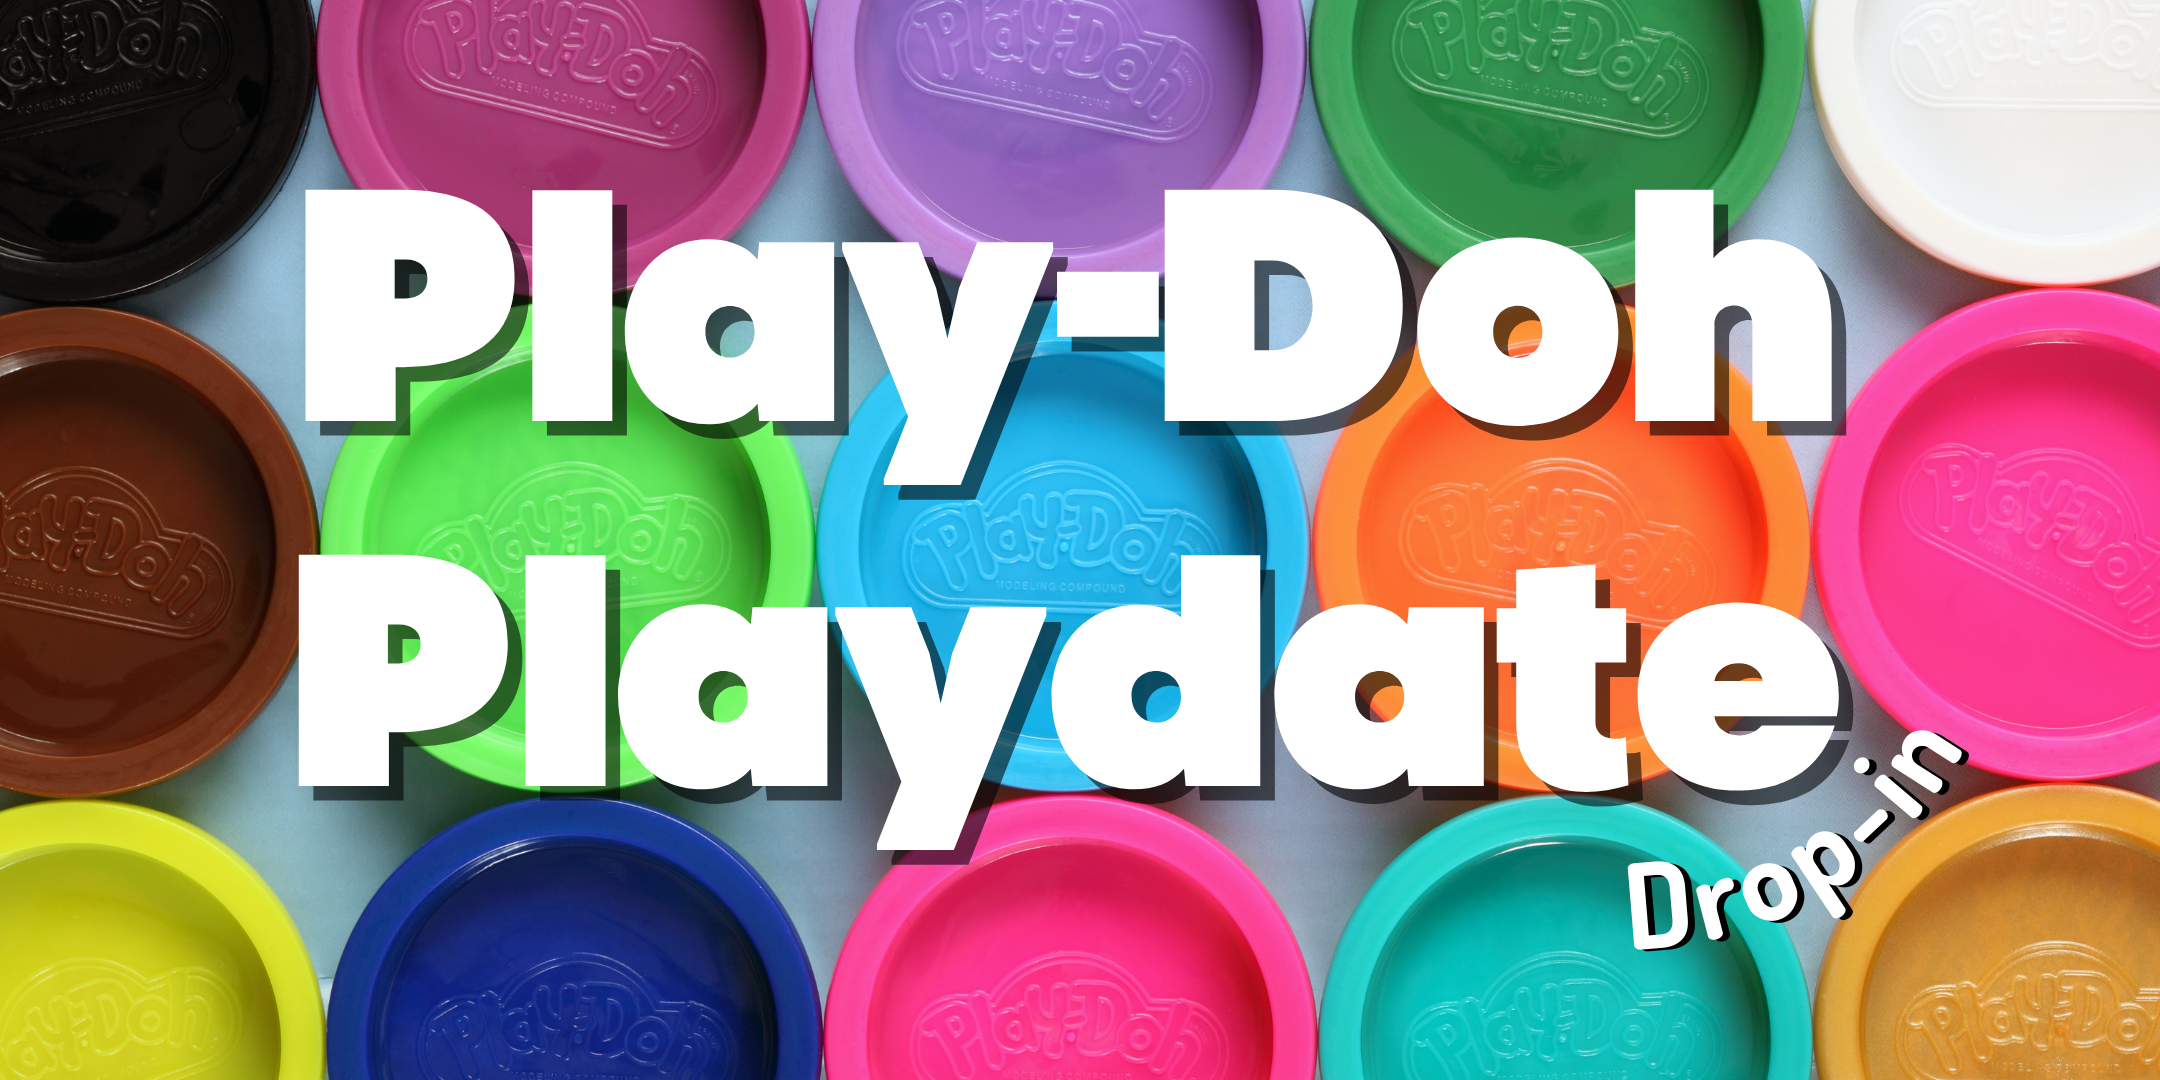 image of "Drop-in Play-Doh Playdate"